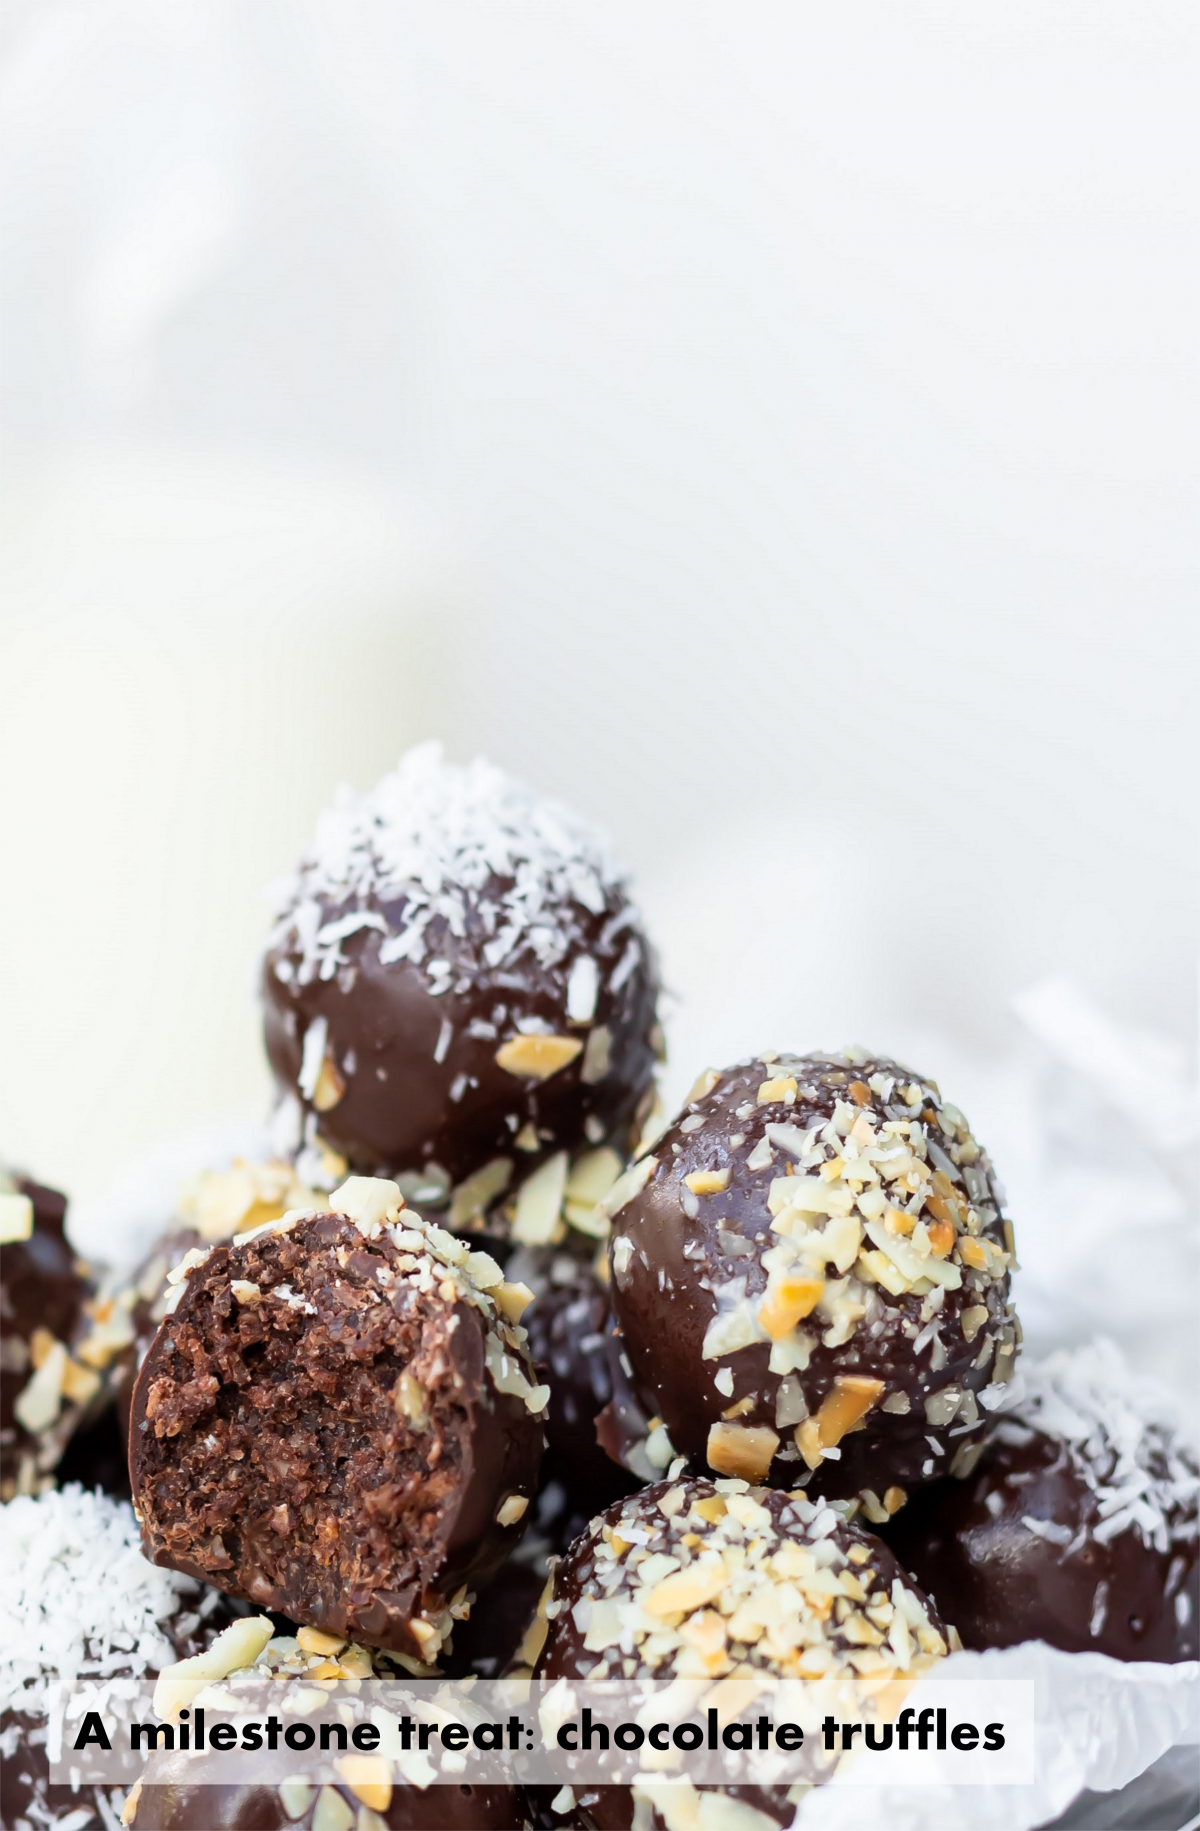 Pile of chocolate truffles. Caption: A milestone treat: chocolate truffles